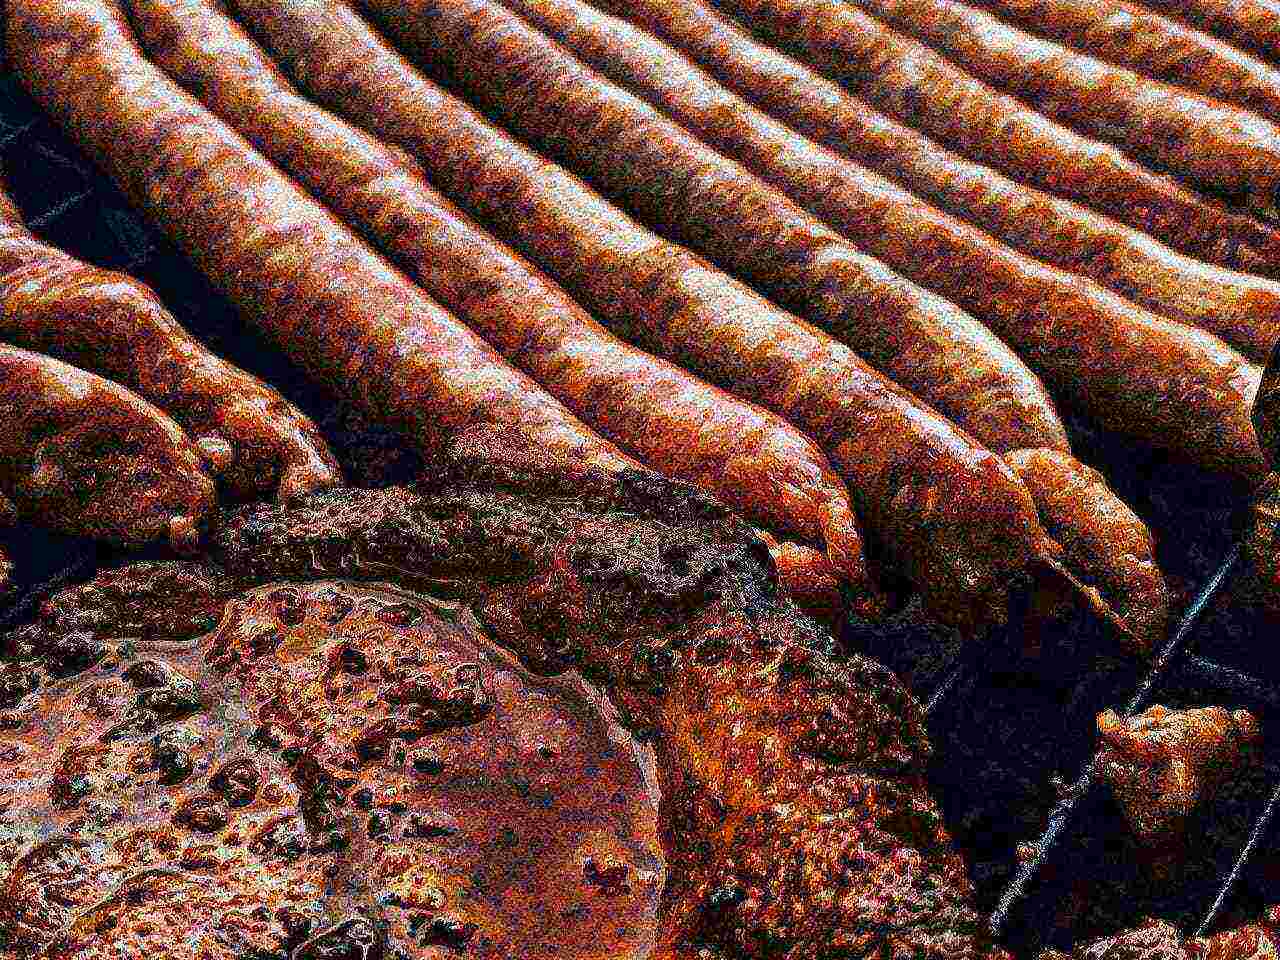 Photo of processed meat by Dids via pexels